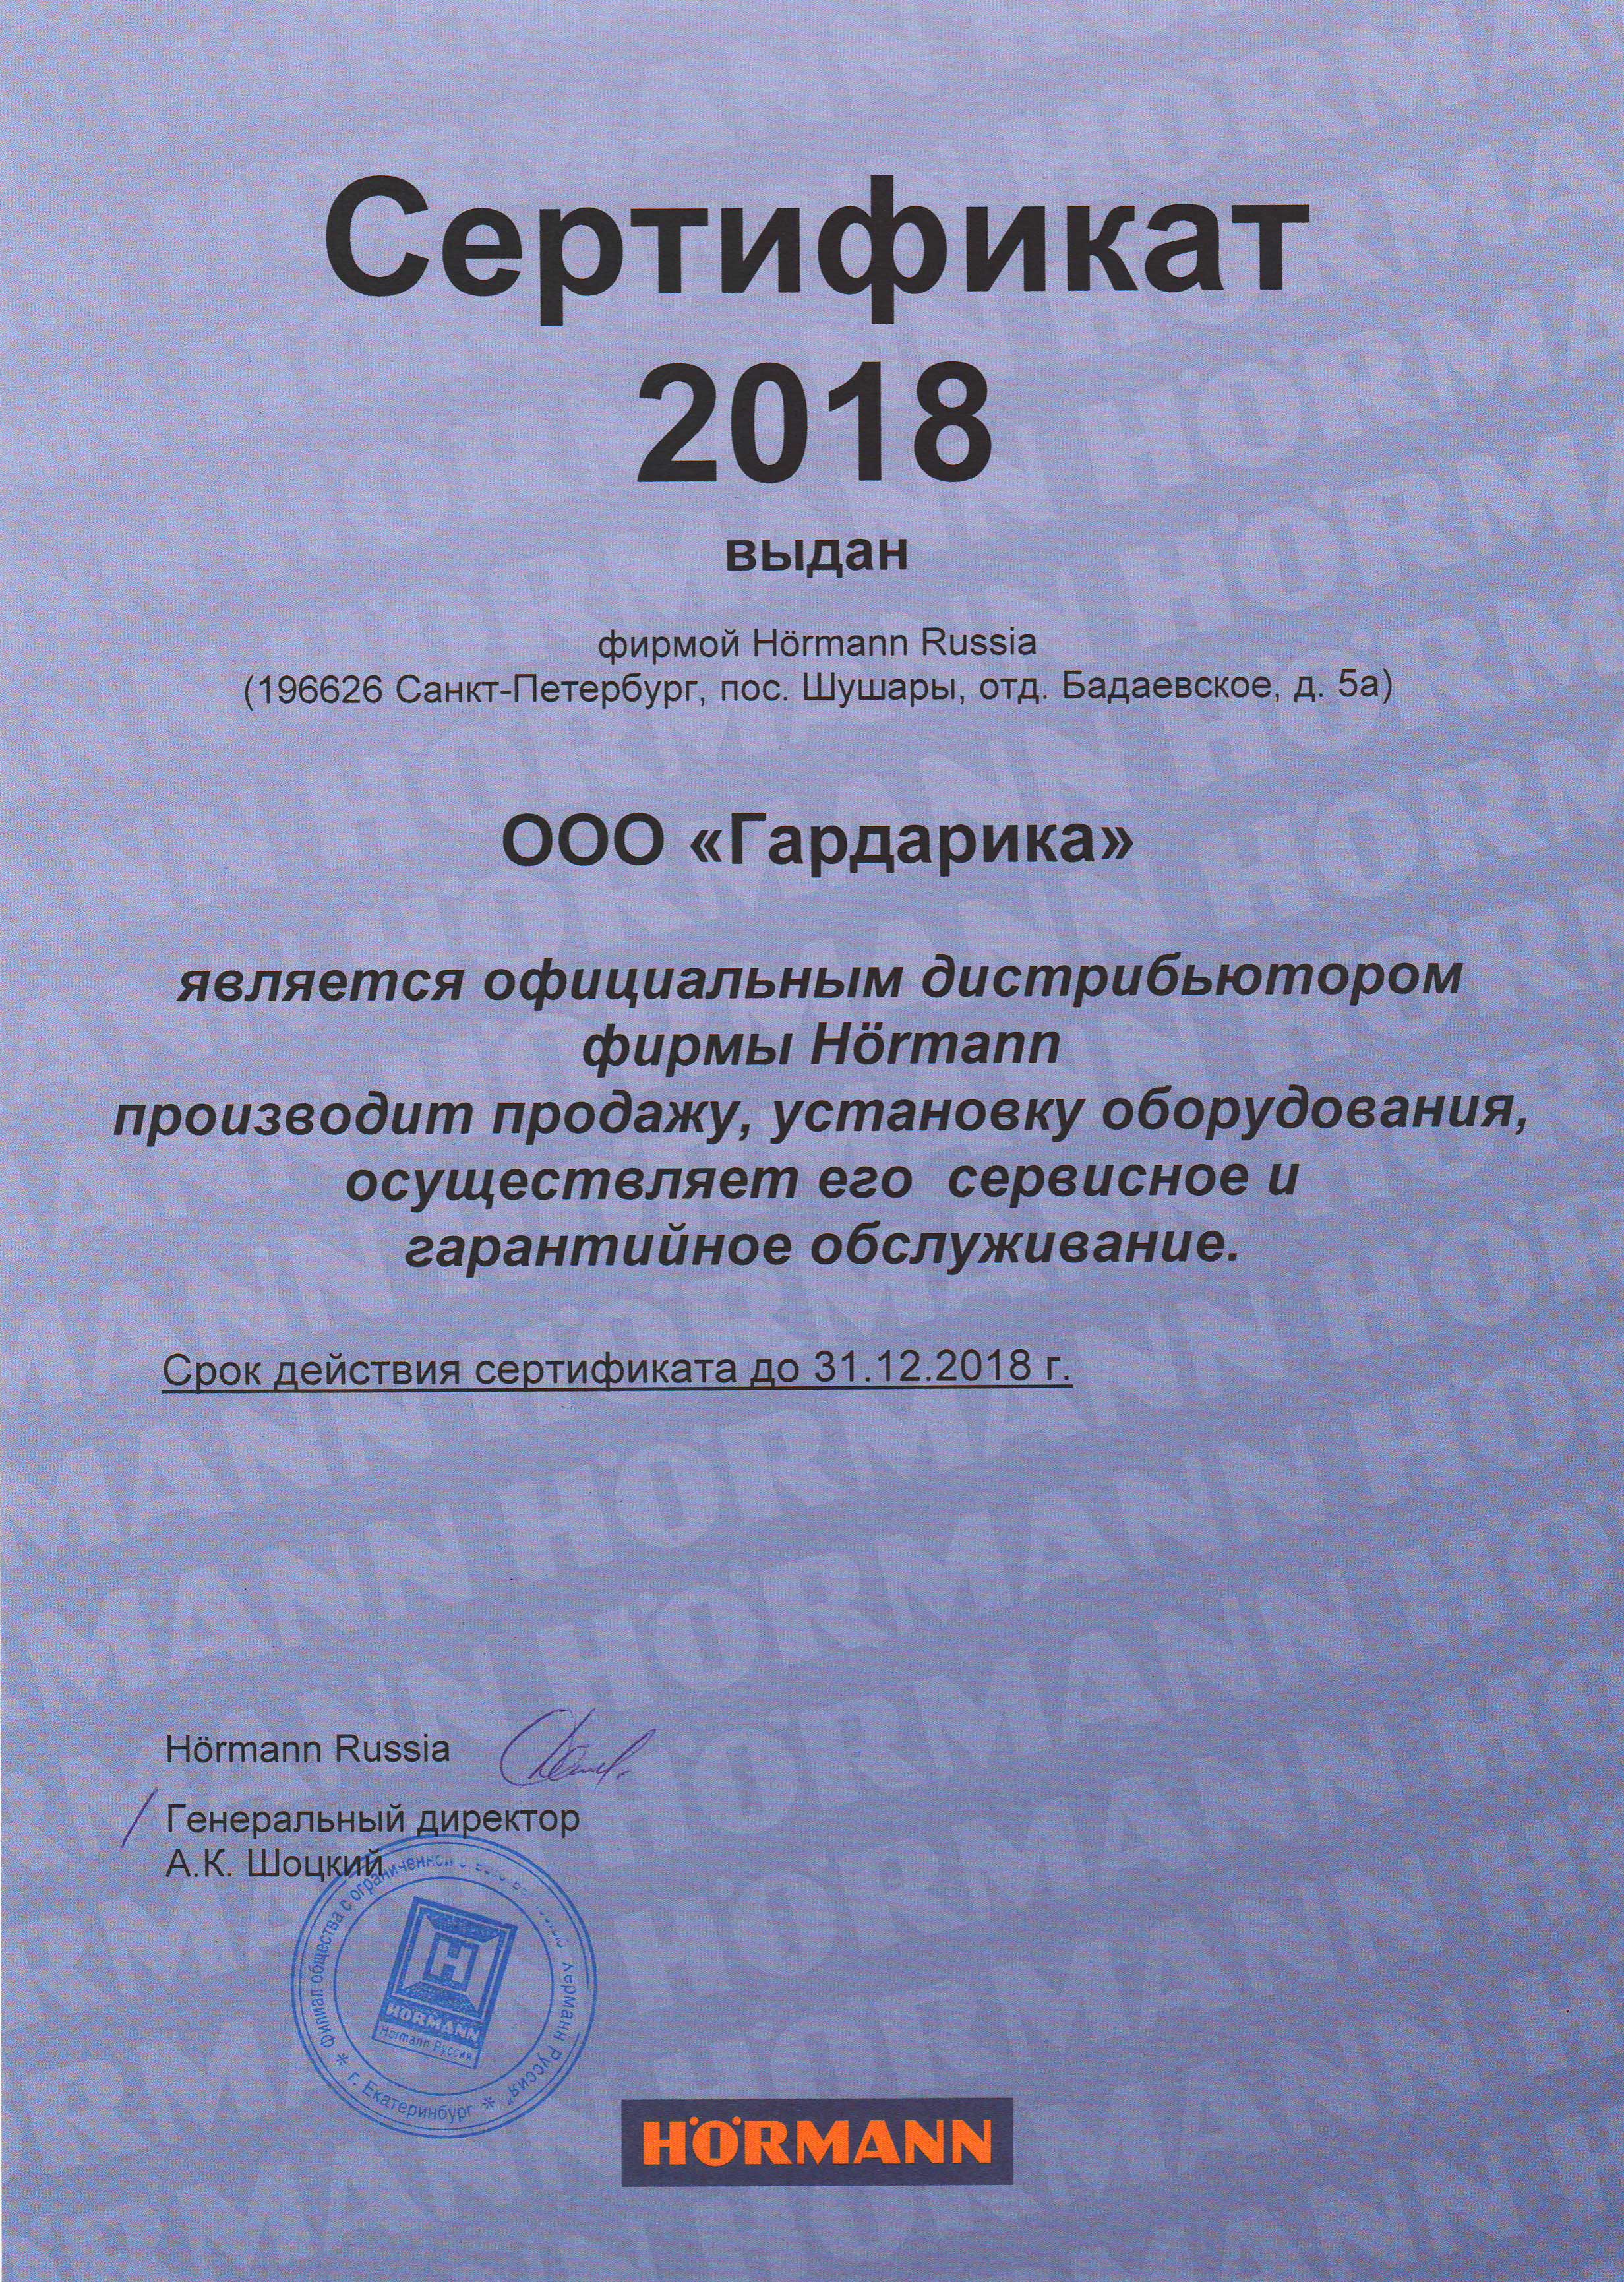 Сертификат дистрибьютора Hormann 2018